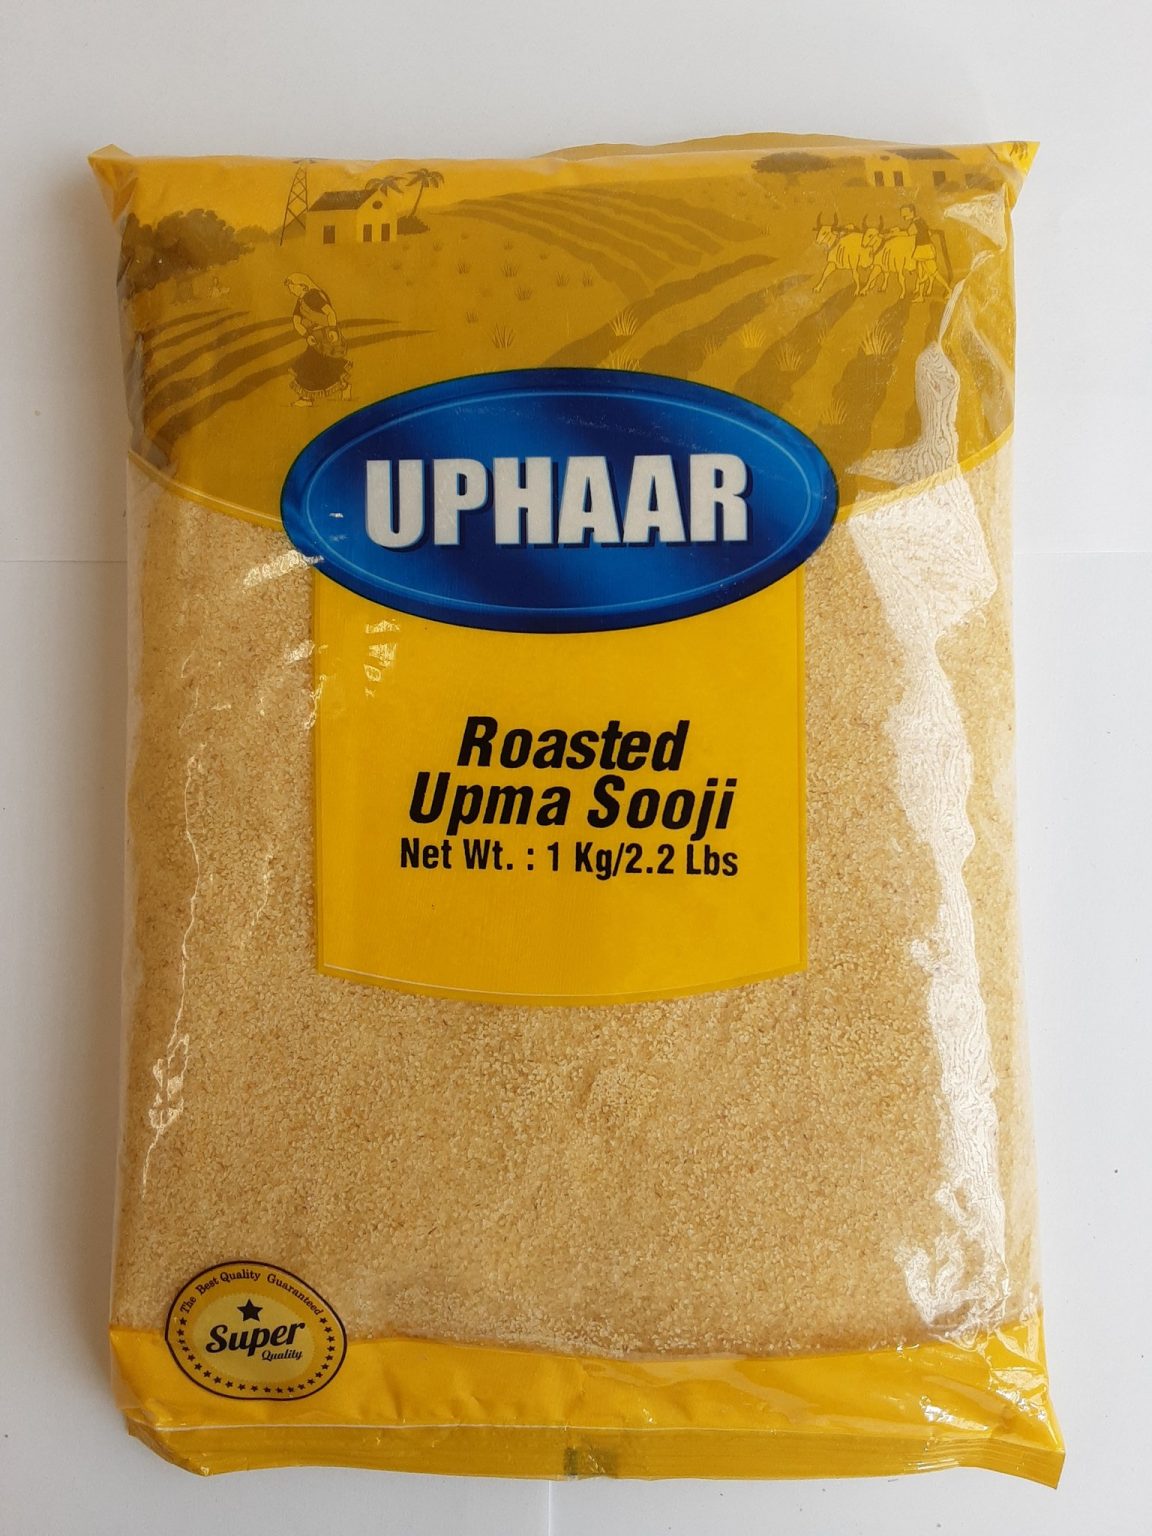 Uphaar Roasted Upma Sooji 1kg - Rashan Pani